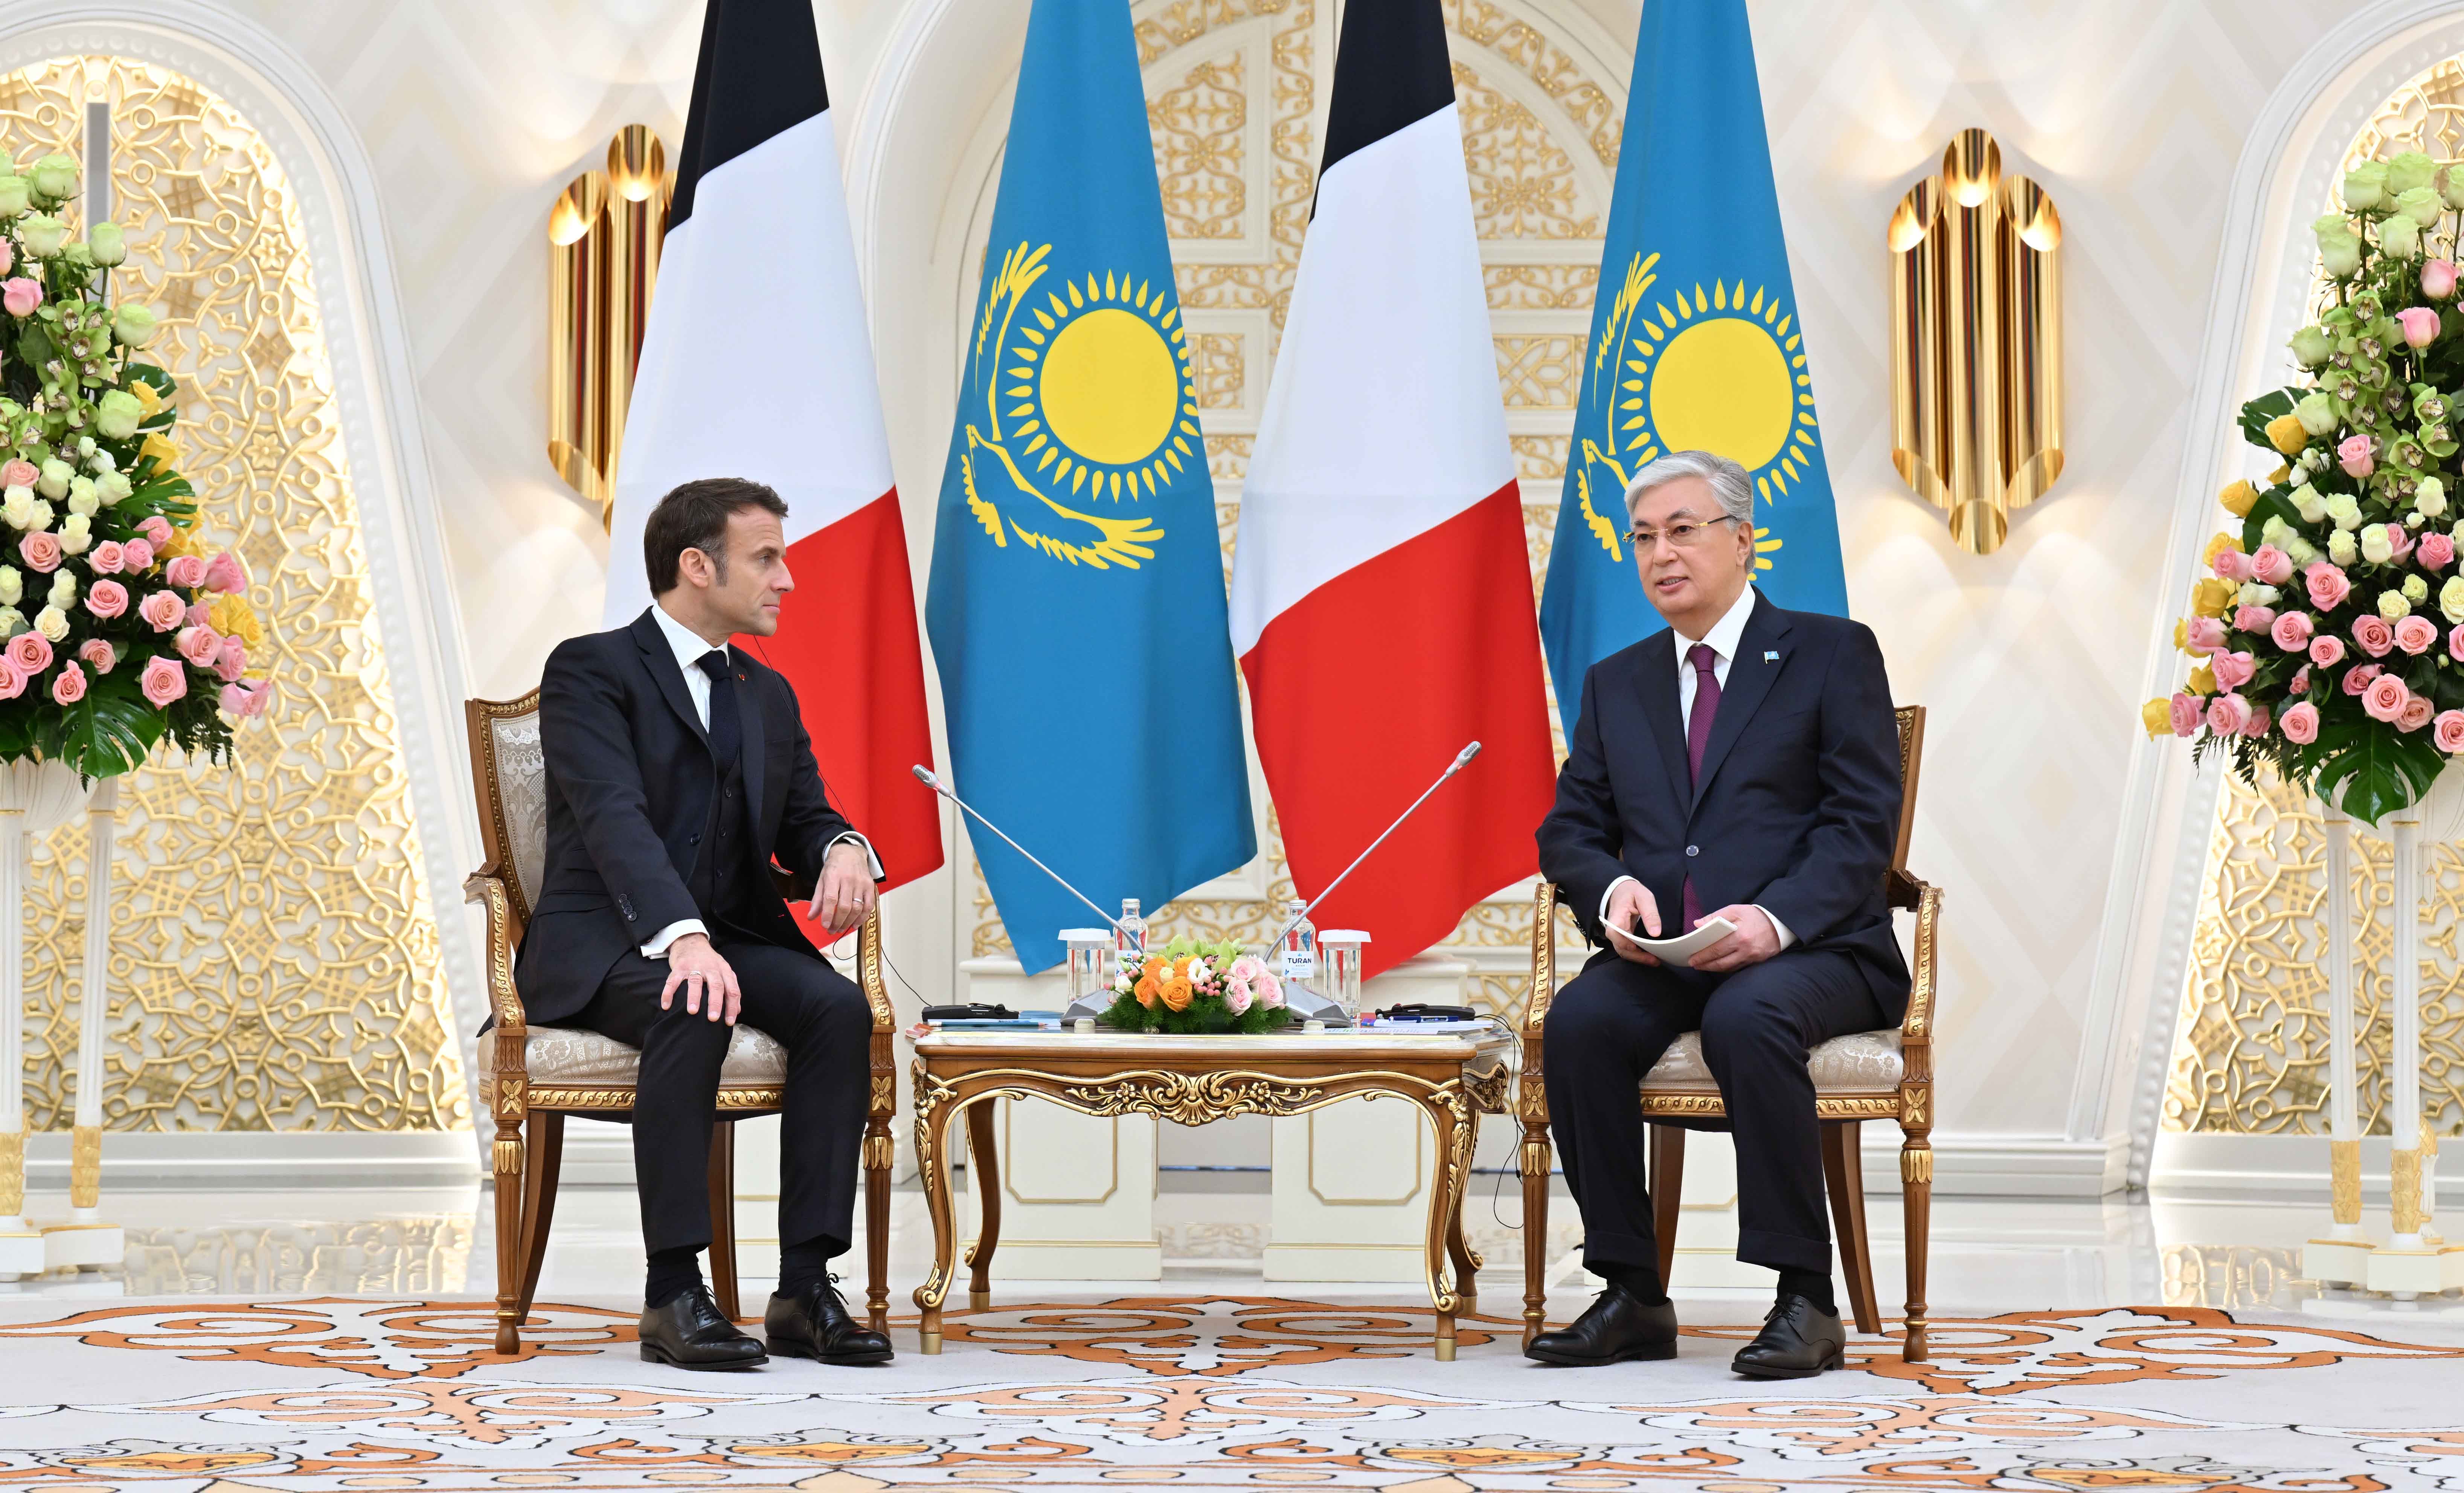 Presidents of Kazakhstan and France elevate strategic partnership through high-level bilateral talks 